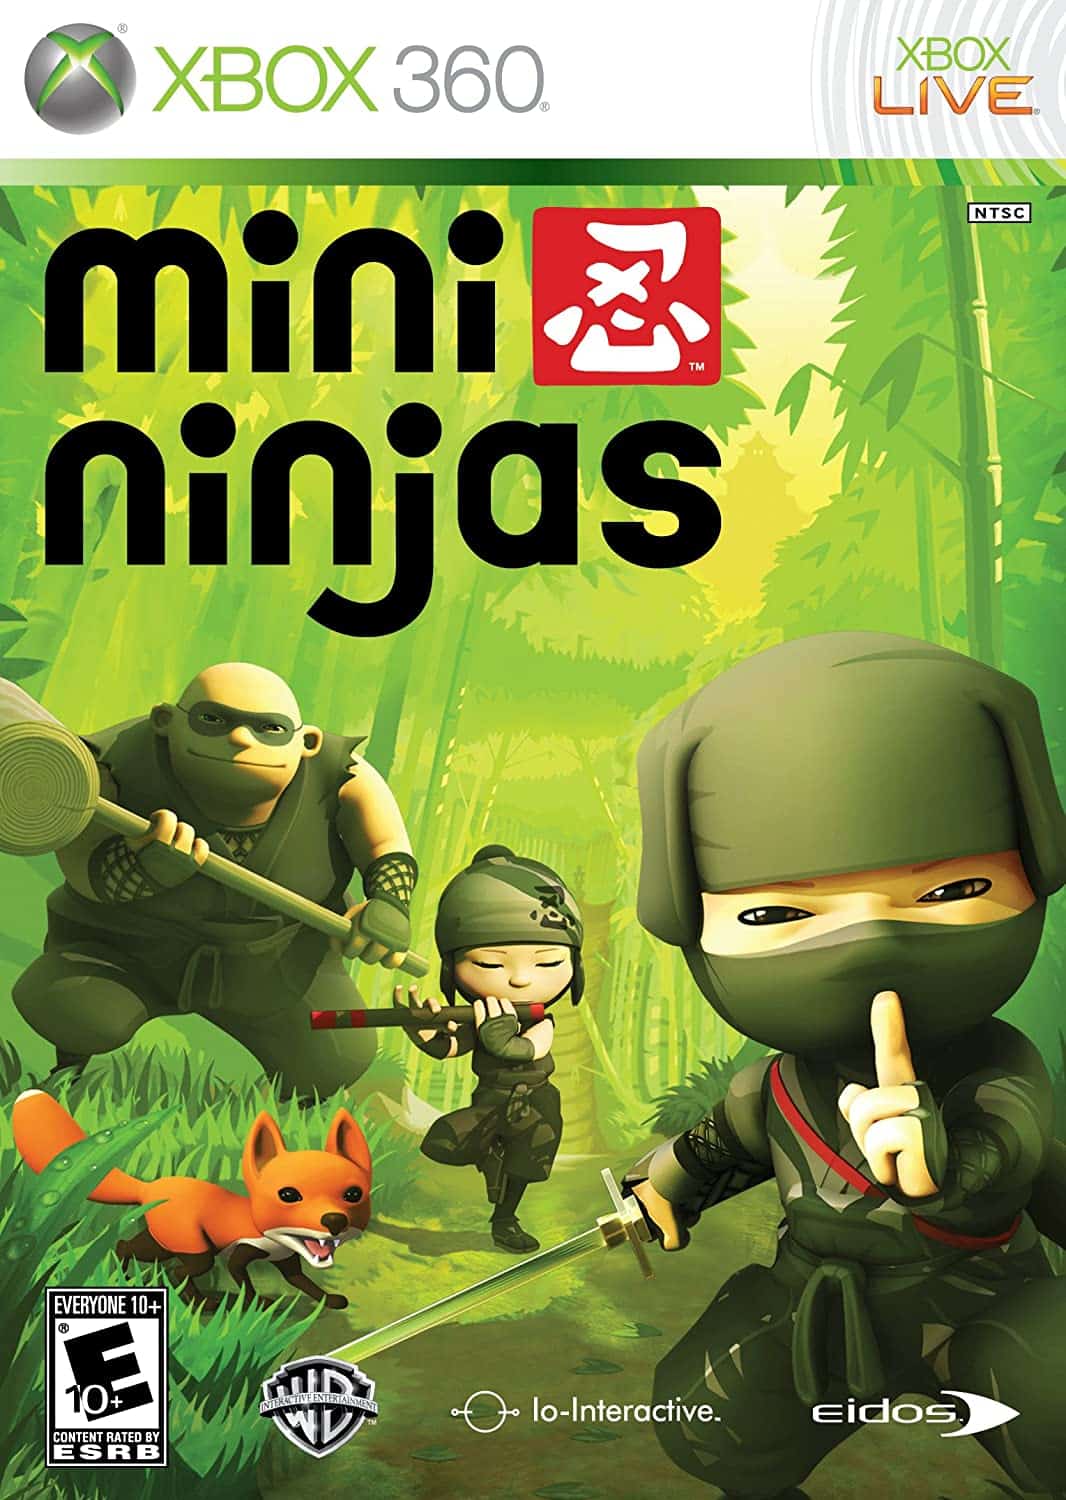 Mini Ninjas player count stats